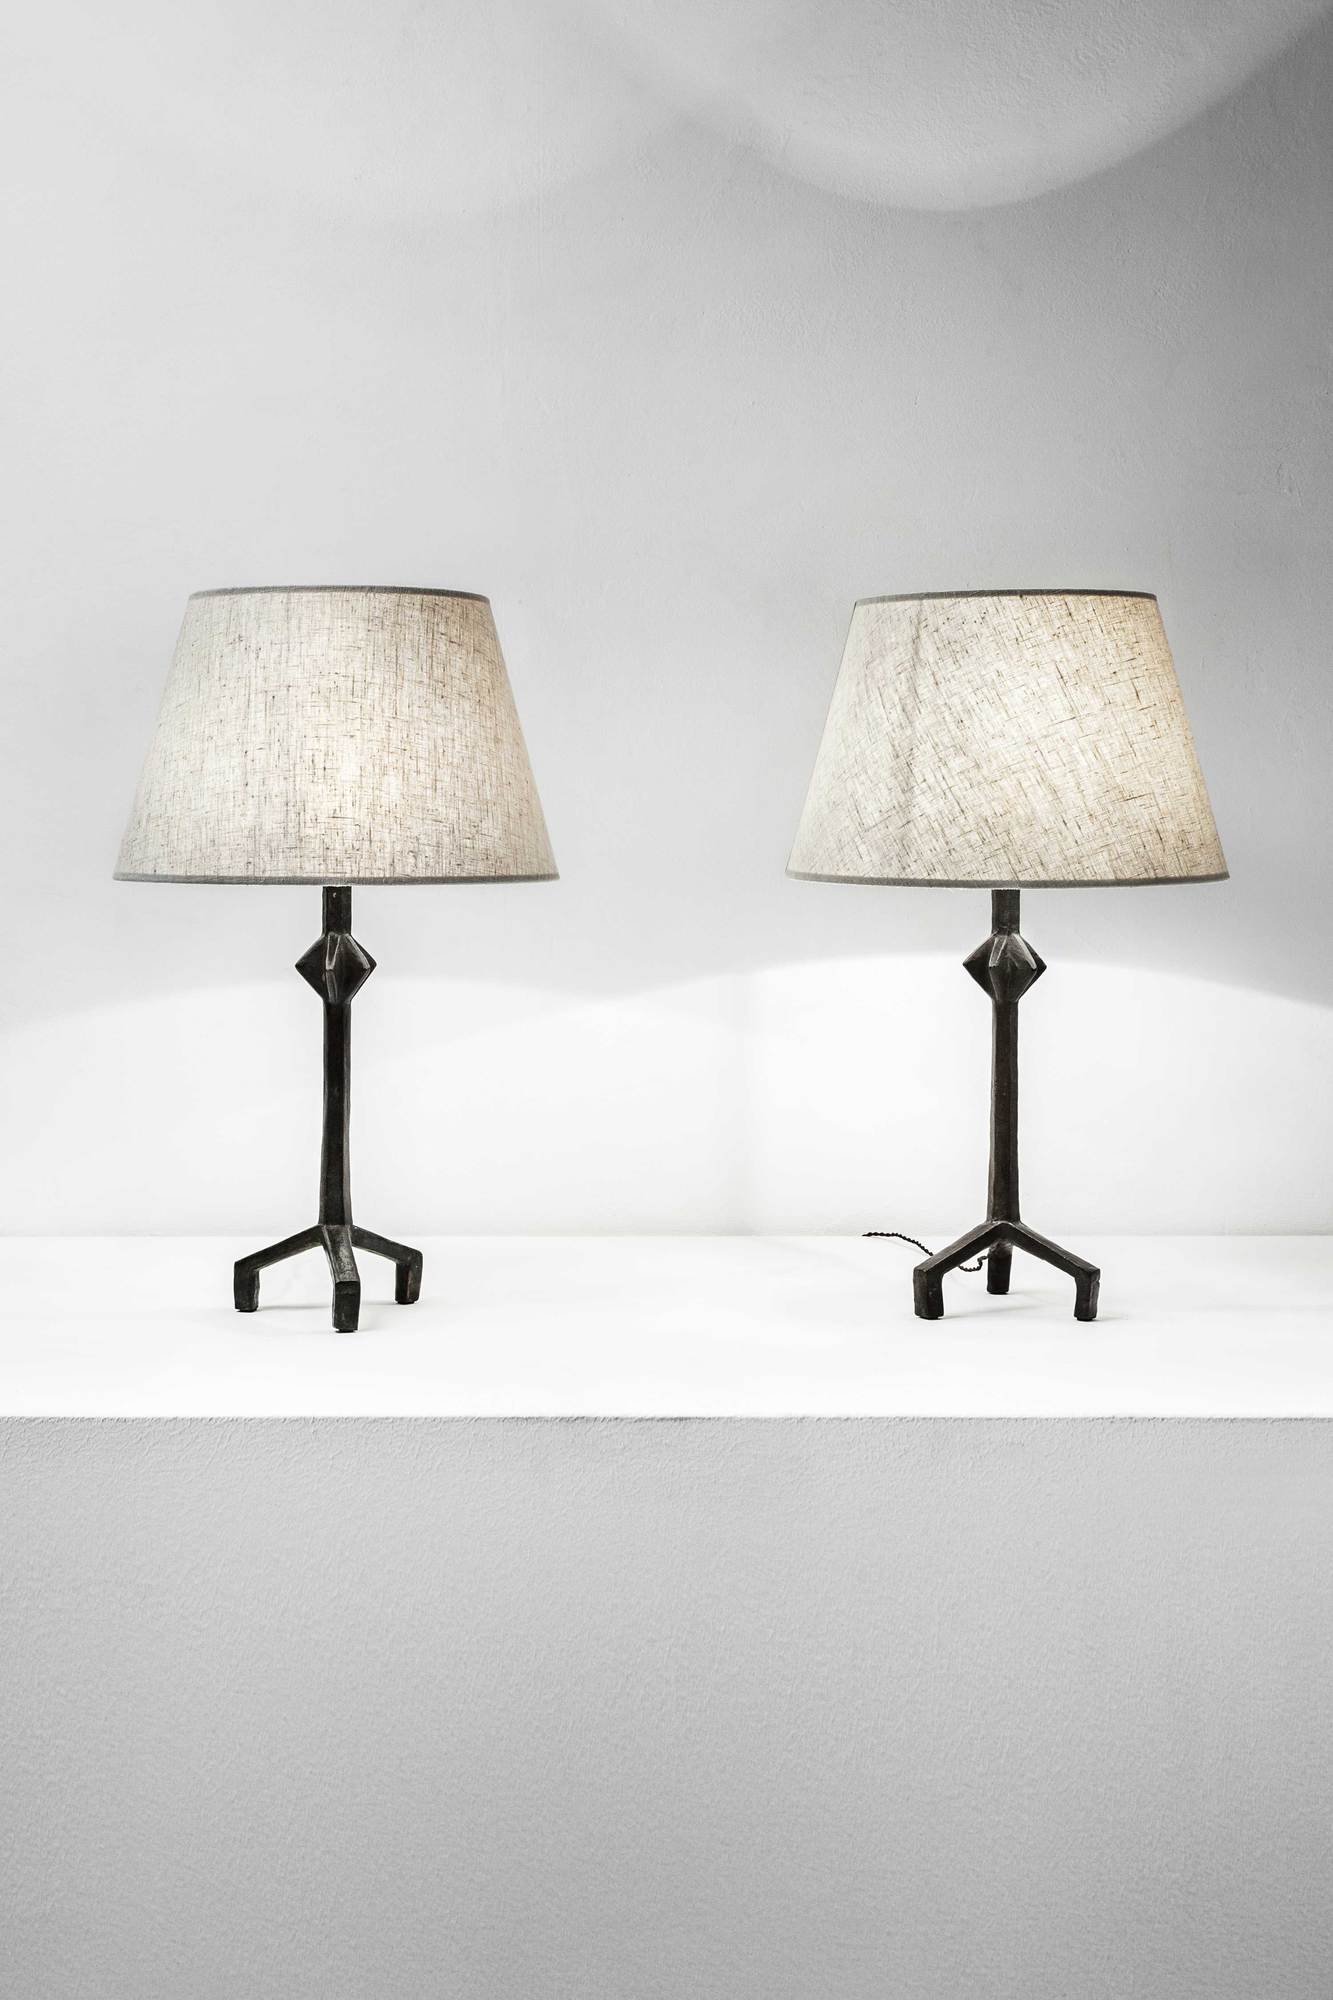 ALBERTO GIACOMETTI, Pair of “Etoile” lamps, vue 01